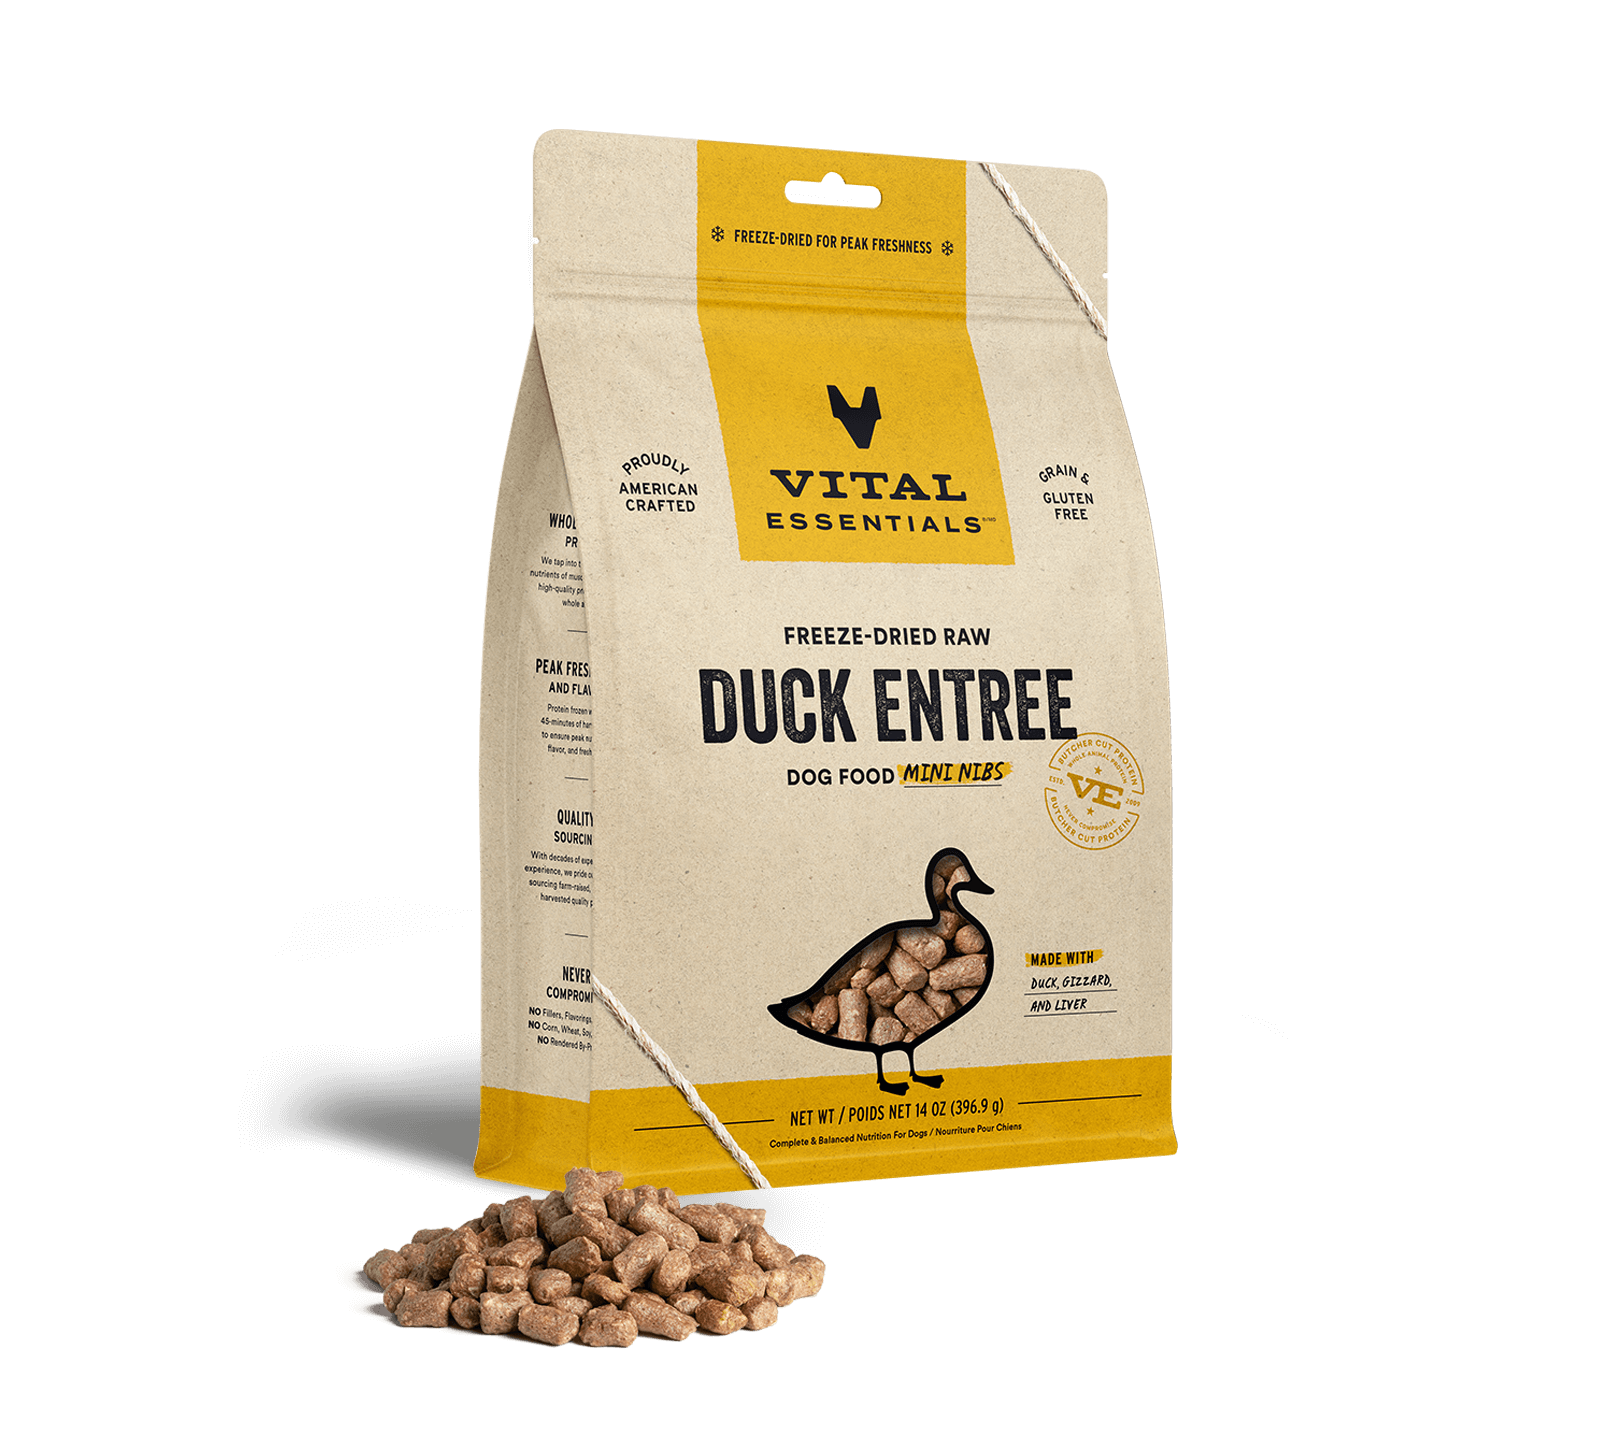 Vital Essentials Freeze-Dried Raw Duck Entree Dog Food Mini Nibs, 14 oz - Health/First Aid